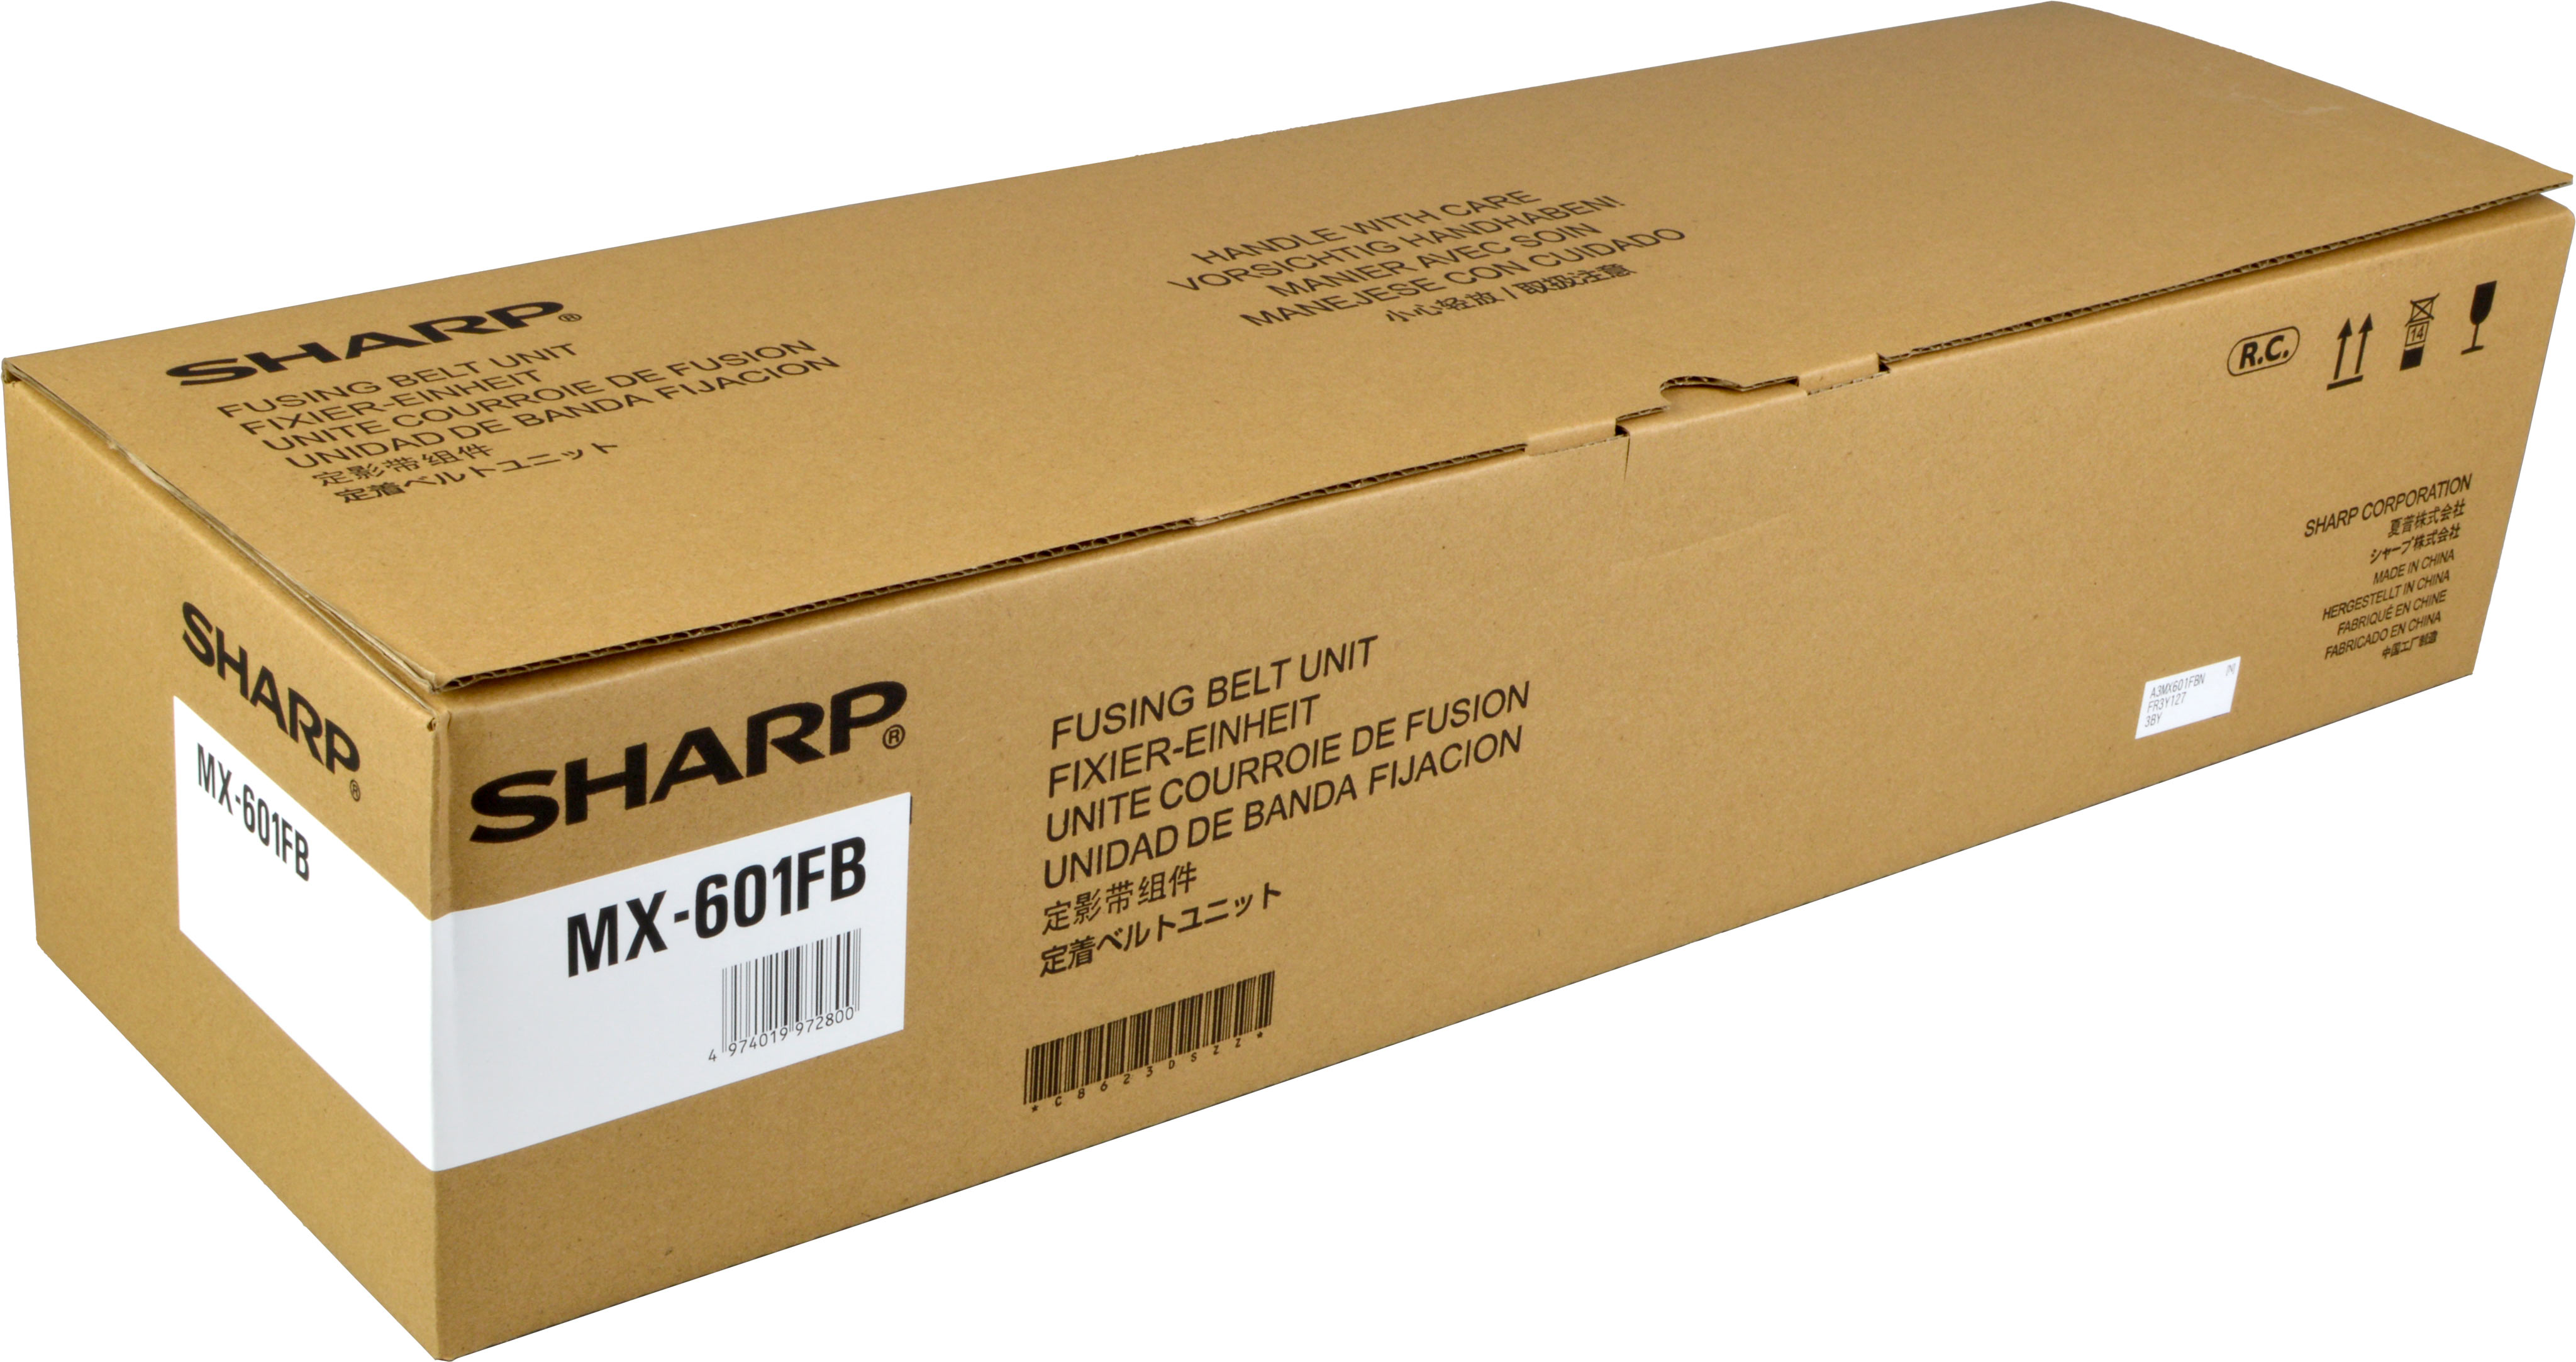 Sharp Fusing Belt MX-601FB